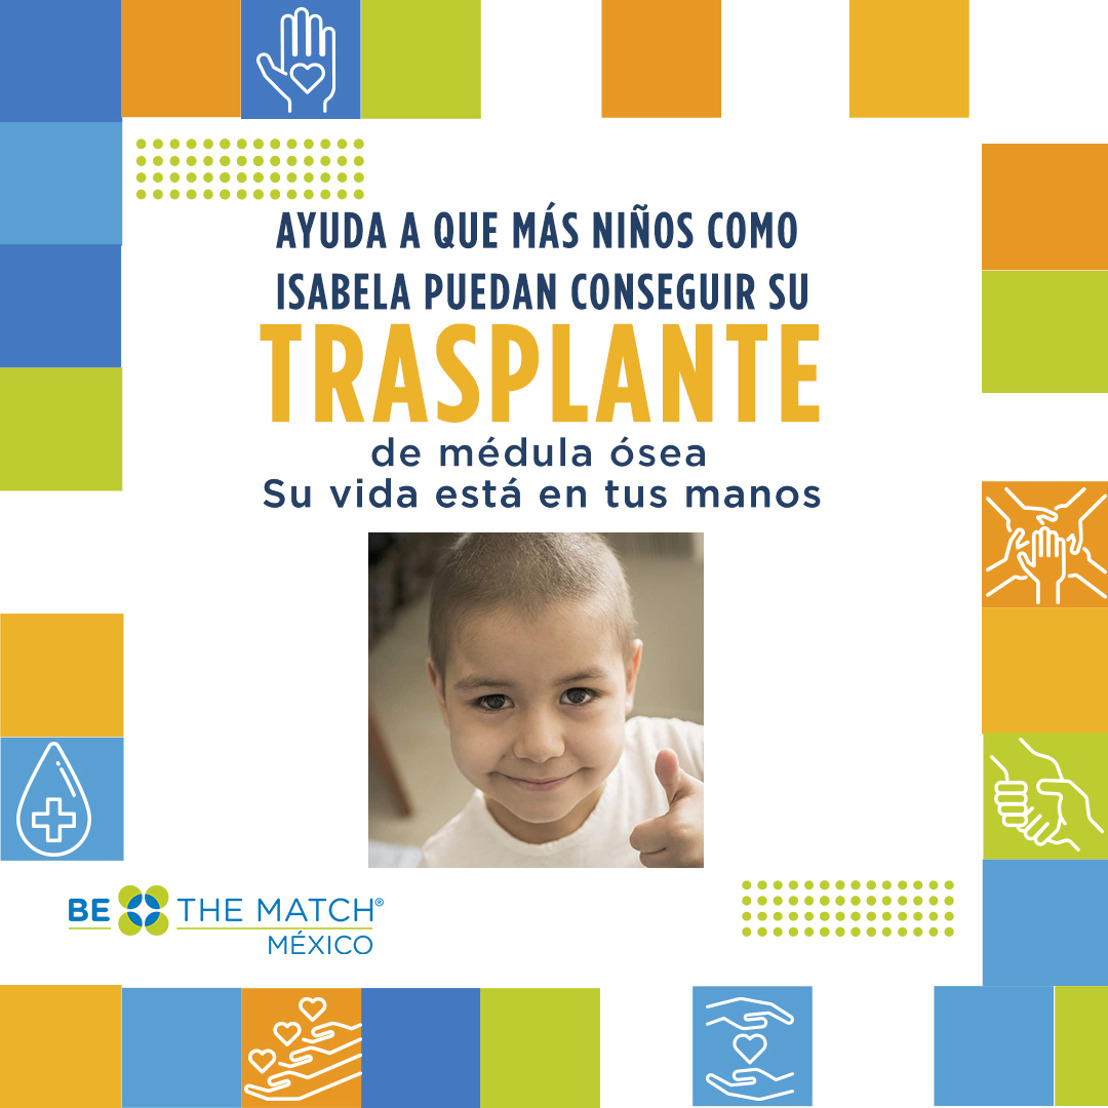 Be The Match México busca recaudar 5 millones de pesos para apoyar a pacientes que necesitan un trasplante de médula ósea.